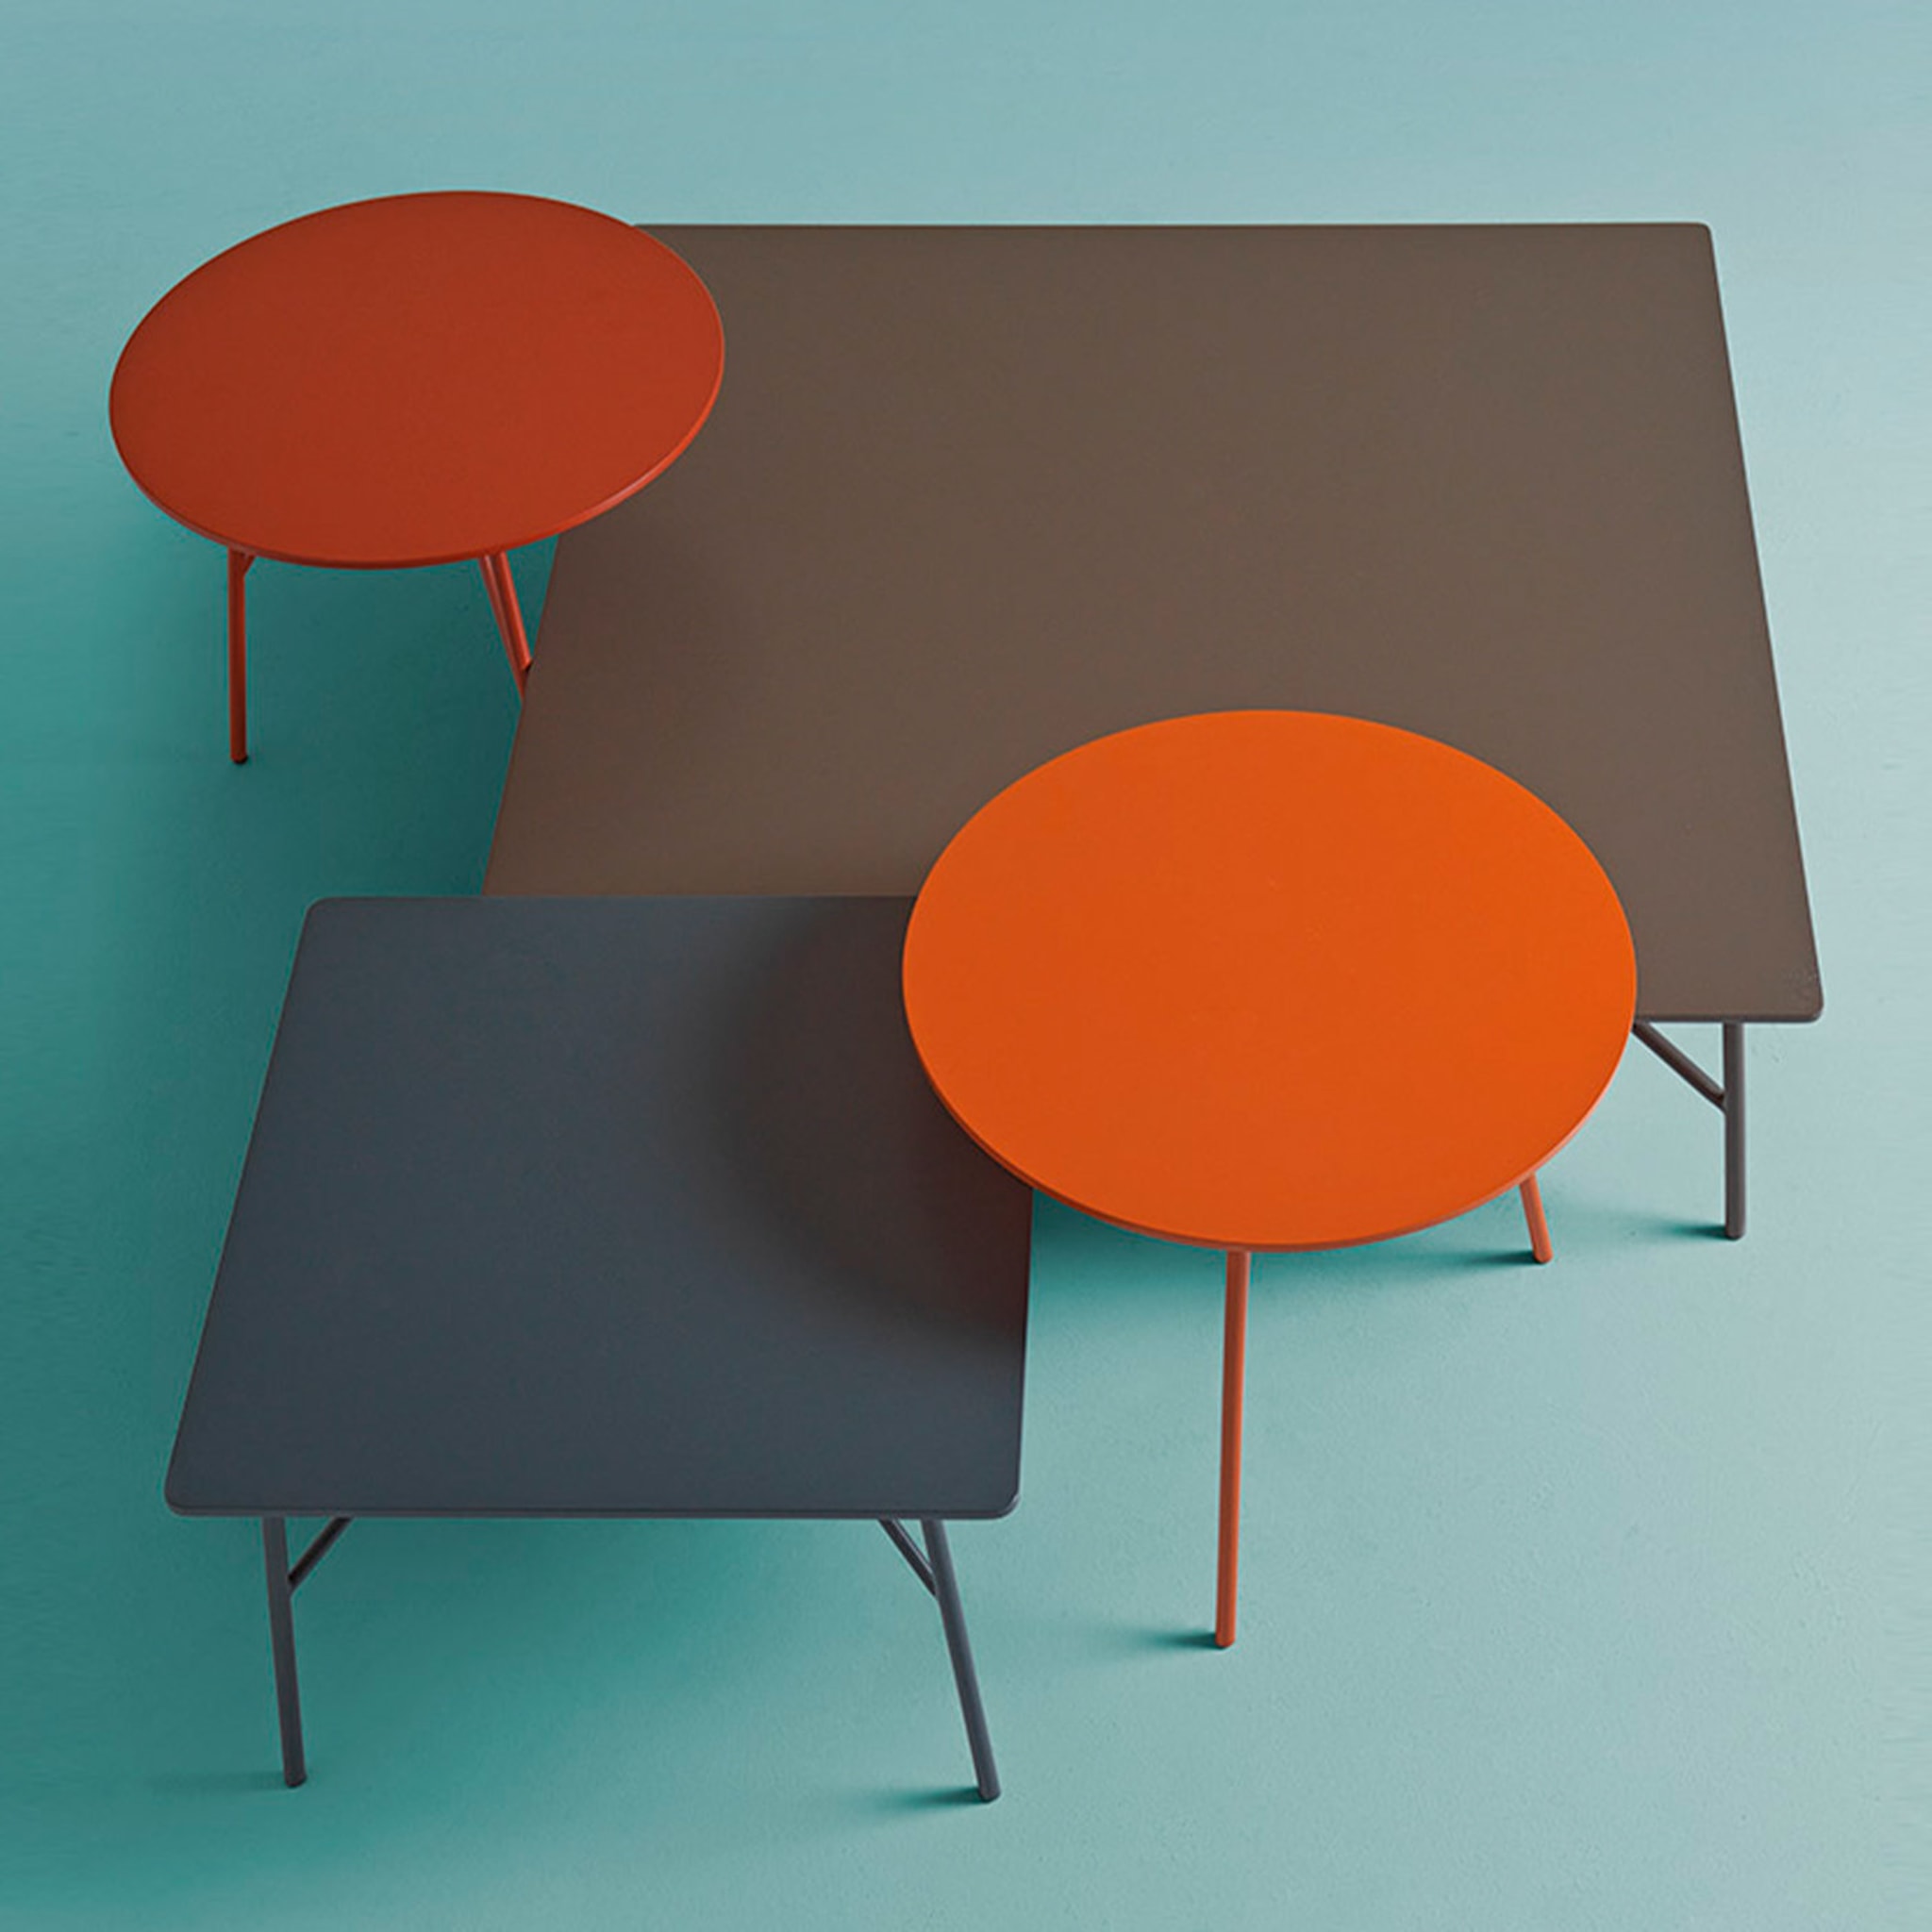 Mek Round Rust Coffee Table by Angeletti Ruzza - Alternative view 1